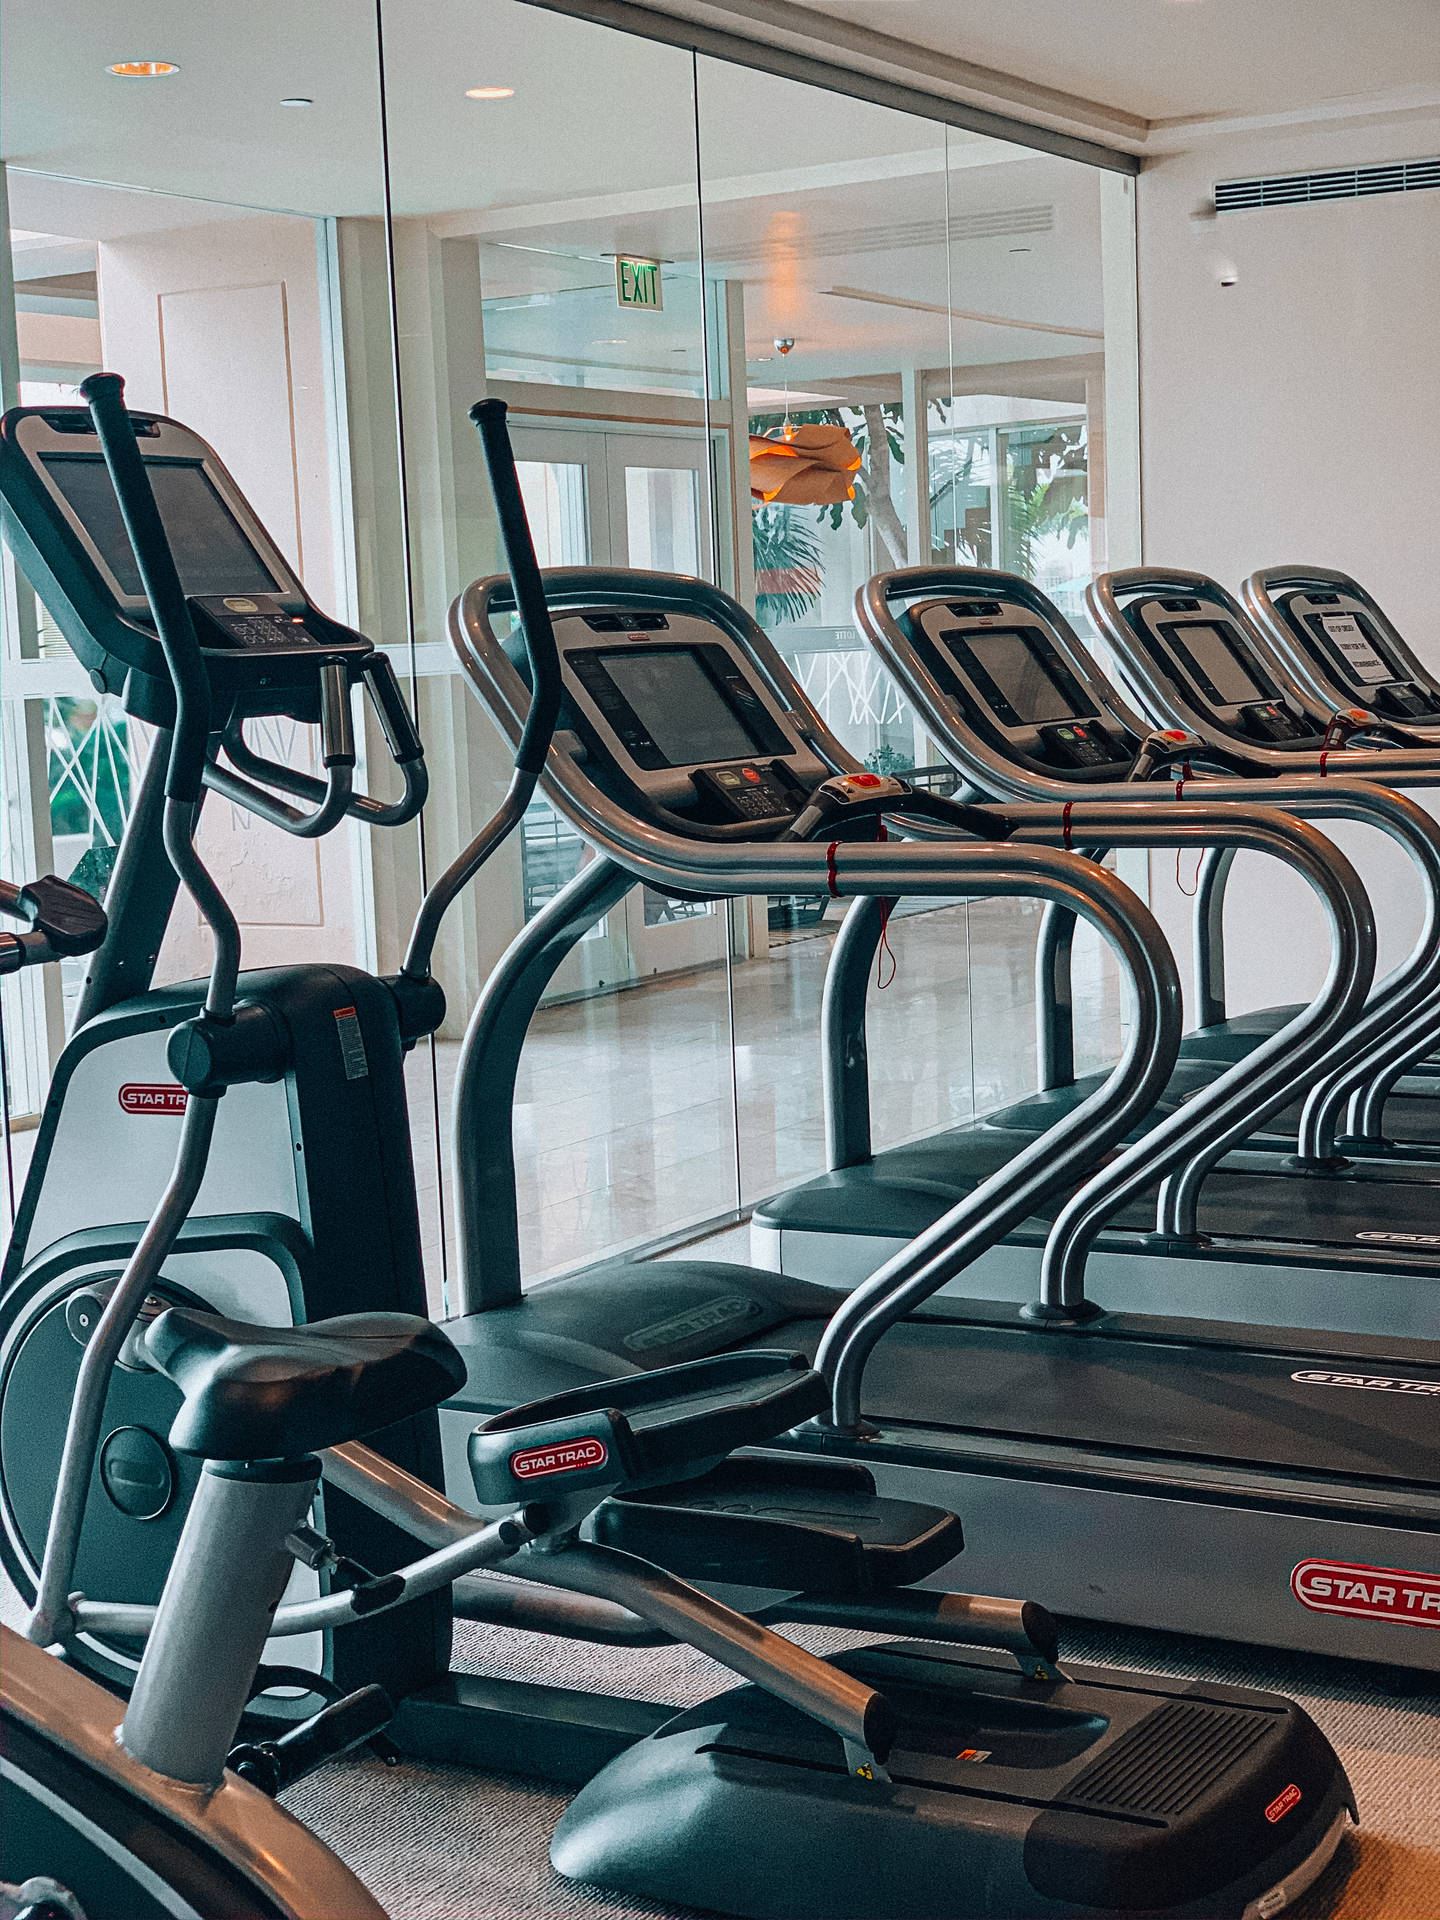 Lined Up Treadmills At Gym Wallpaper